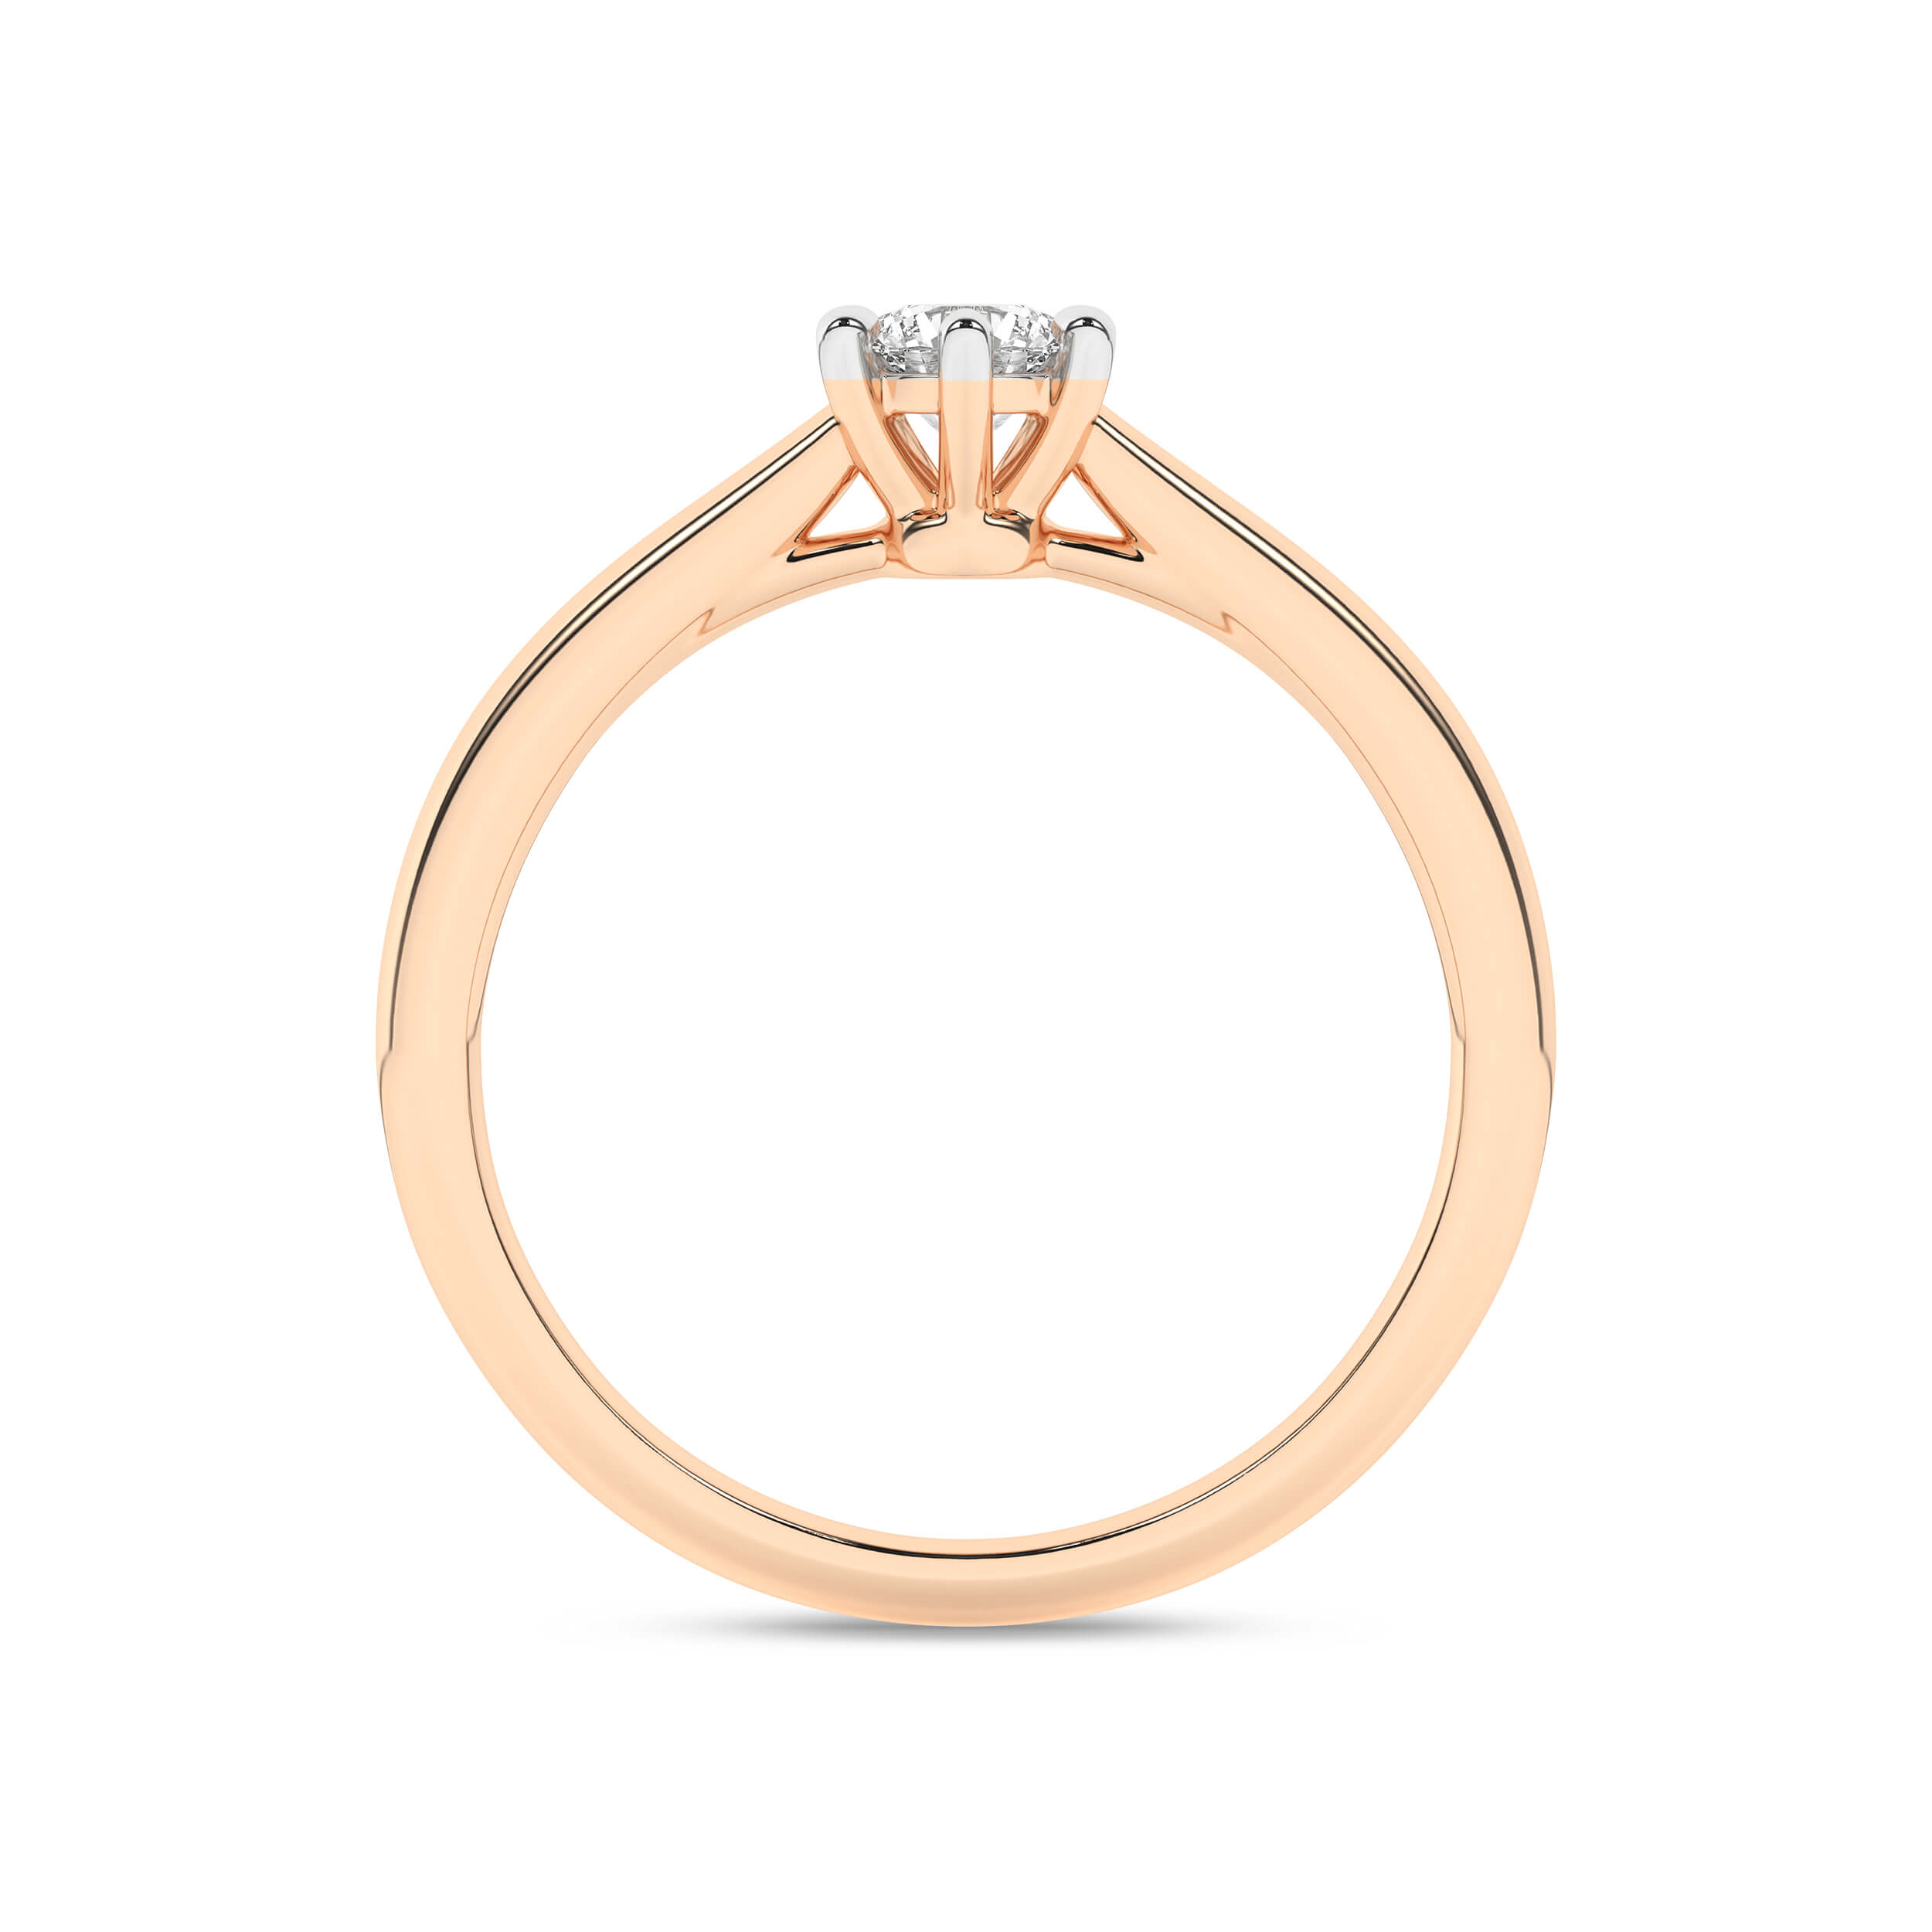 Inel de logodna din Aur Roz 14K cu Diamant 0.25Ct, articol RS1449, previzualizare foto 2